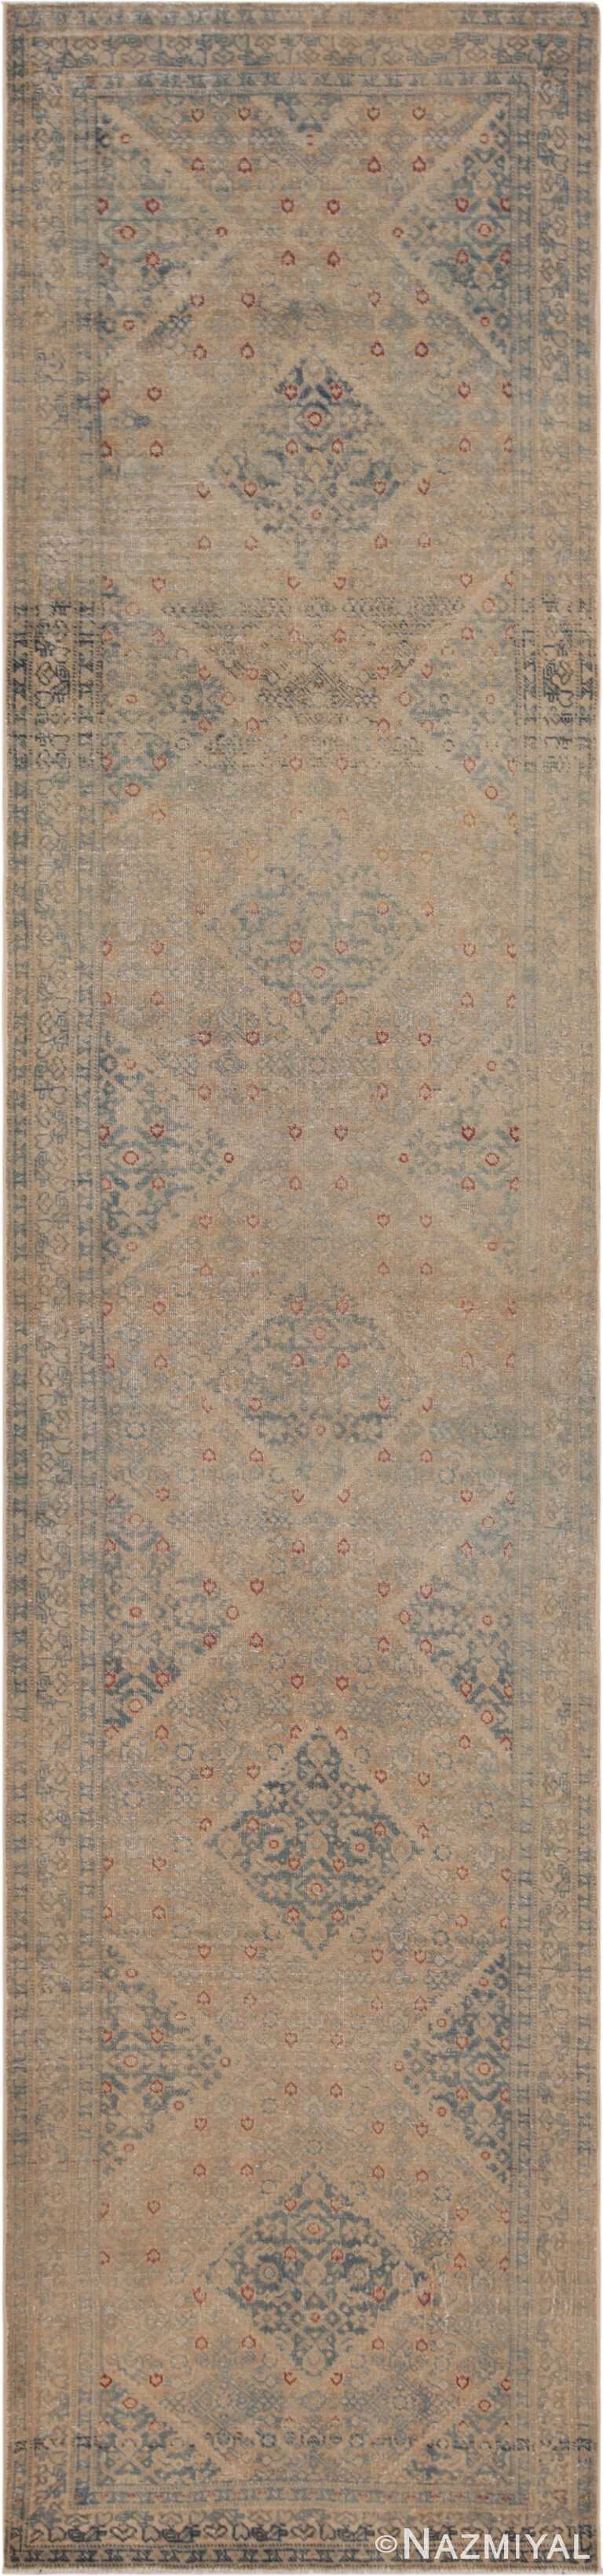 Geometric Antique Persian Tabriz Runner Rug 72818 by Nazmiyal Antique Rugs